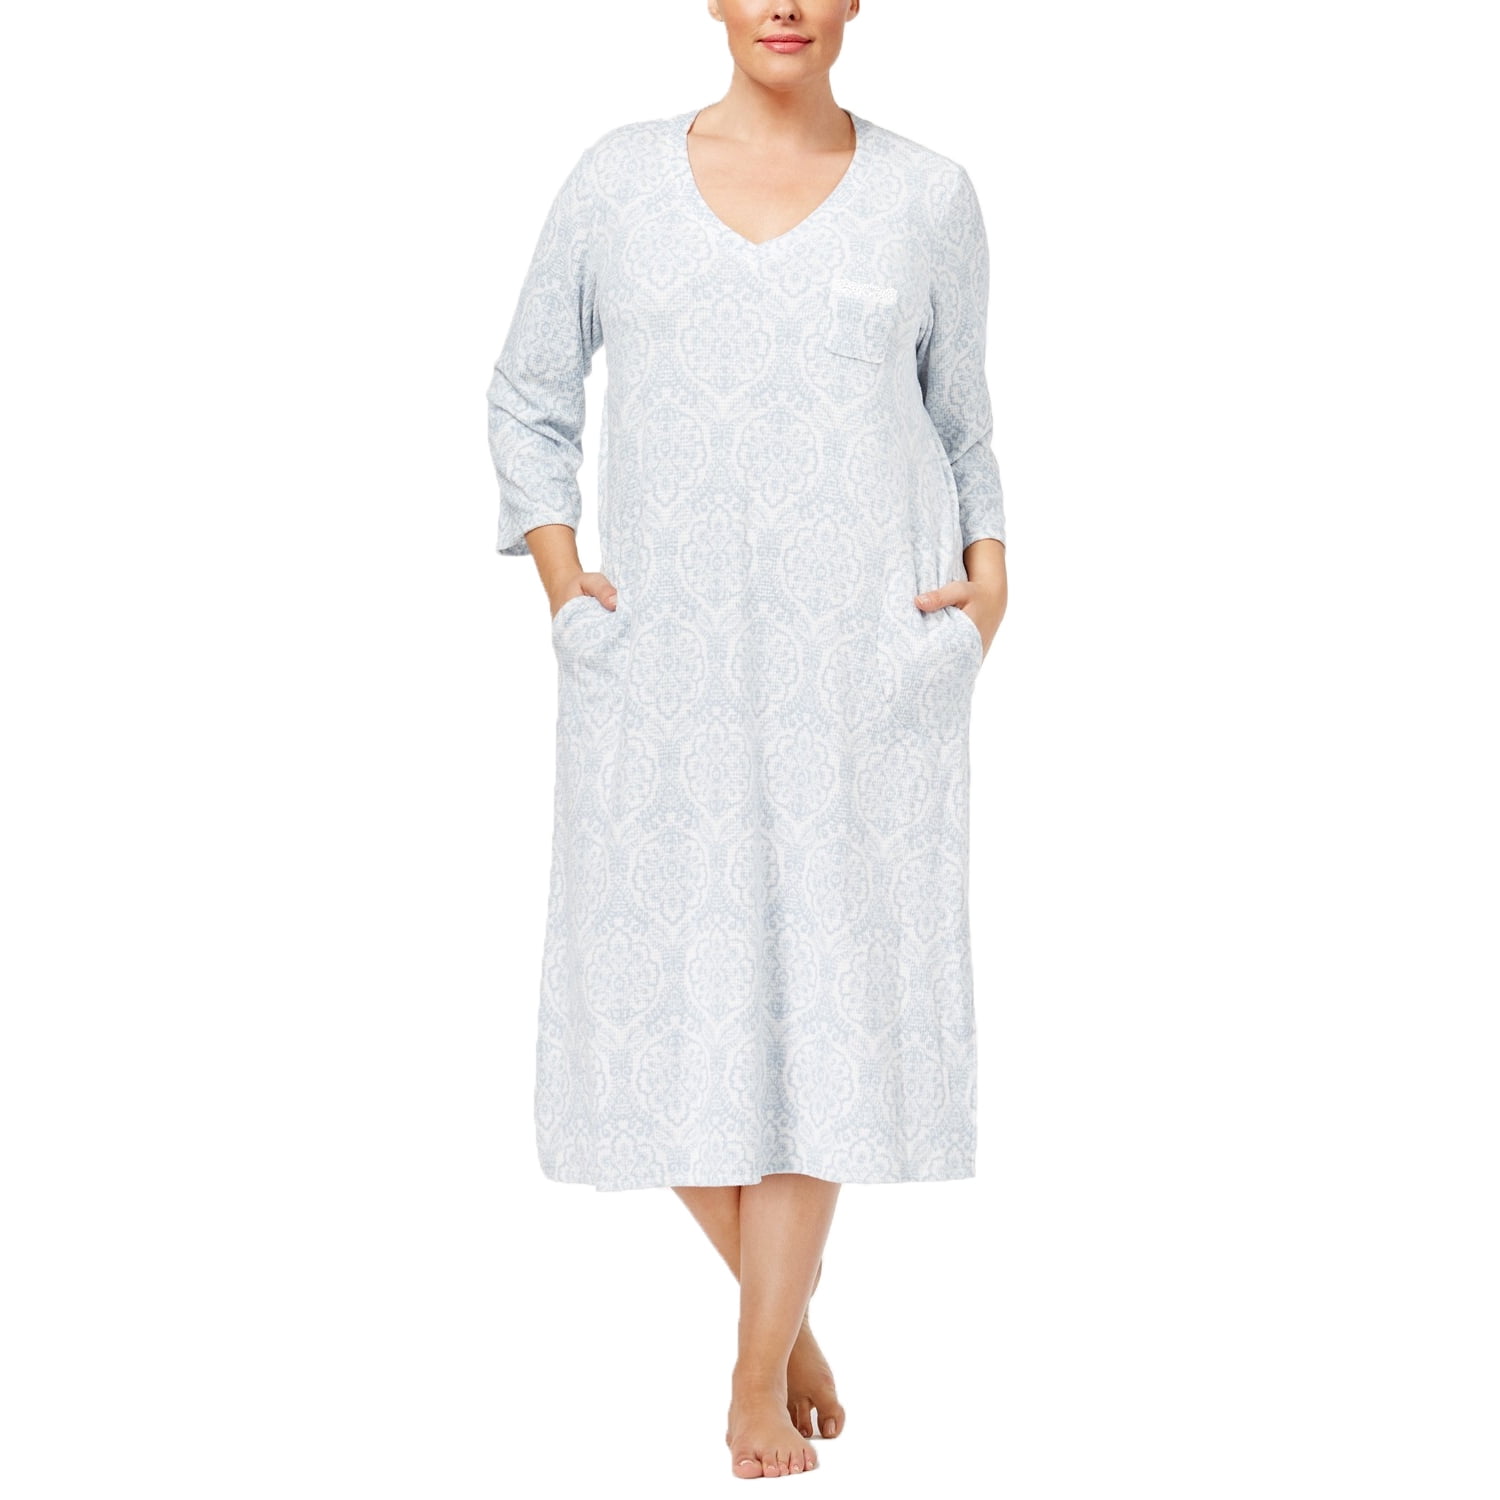 Elaine Women's Plus Size Brushed Nightgown (Grey Damask, 2X) - Walmart.com